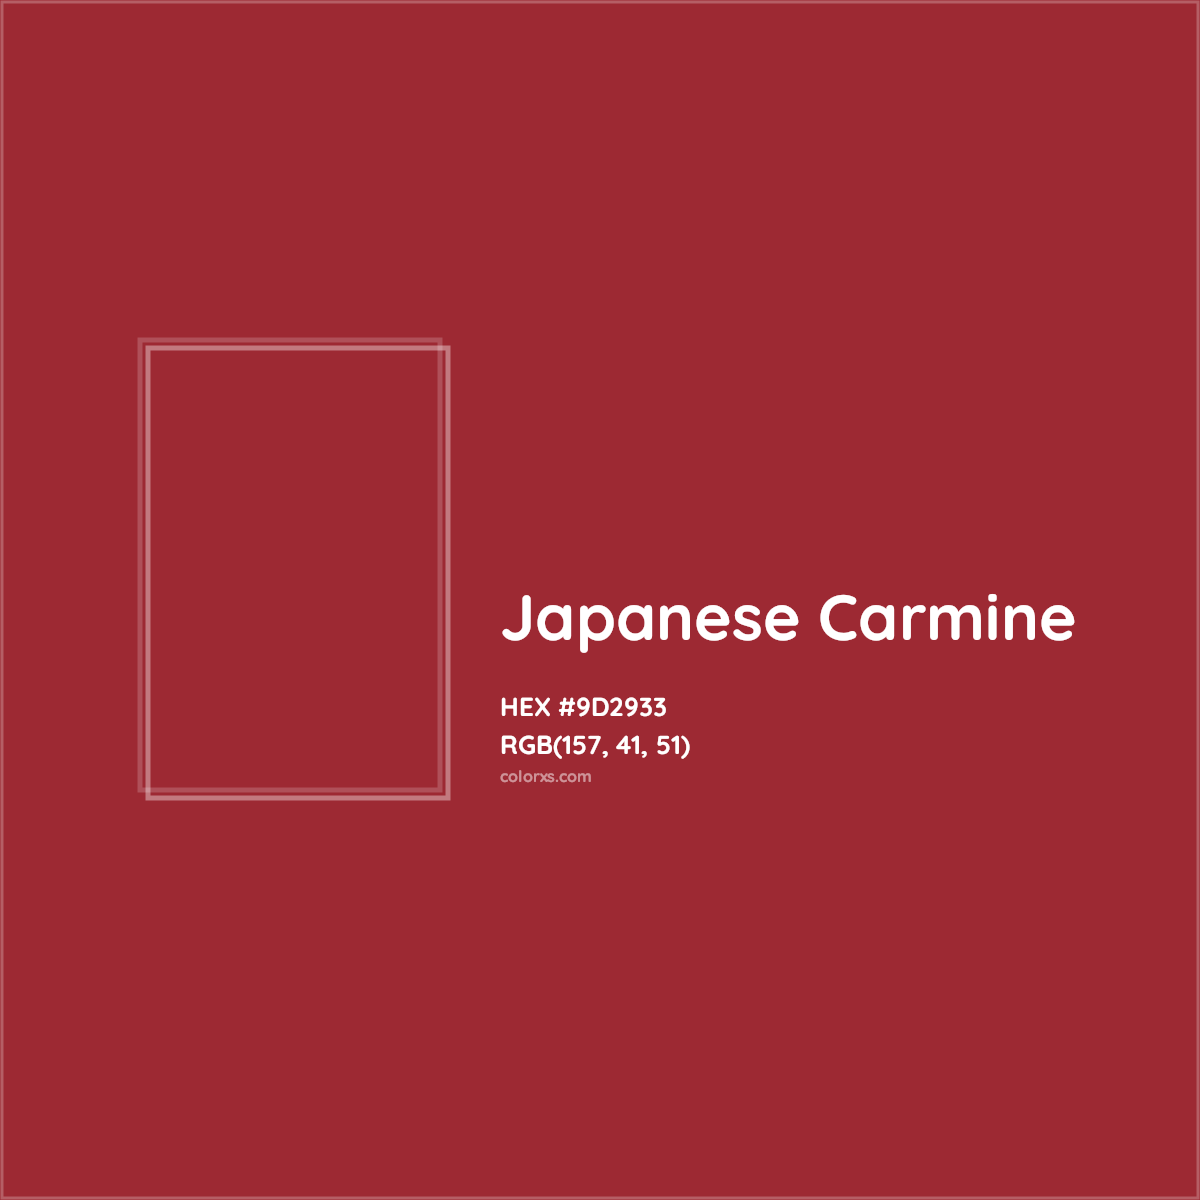 HEX #9D2933 Japanese Carmine Color - Color Code